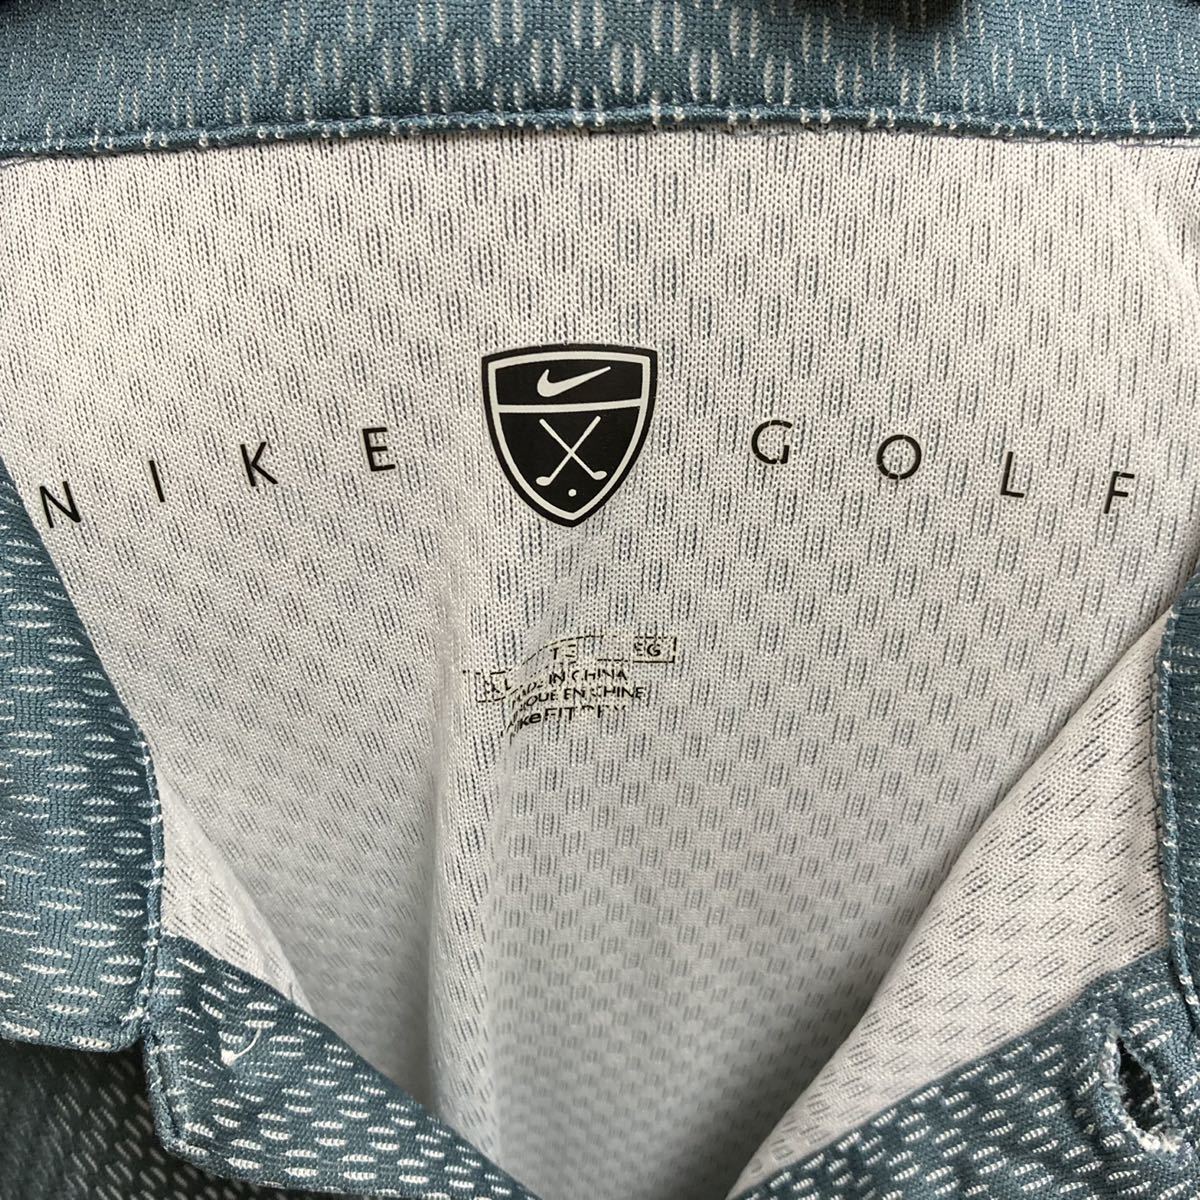 【NIKE GOLF】 ナイキ ゴルフ メンズ 長袖ポロシャツ XL 送料無料!